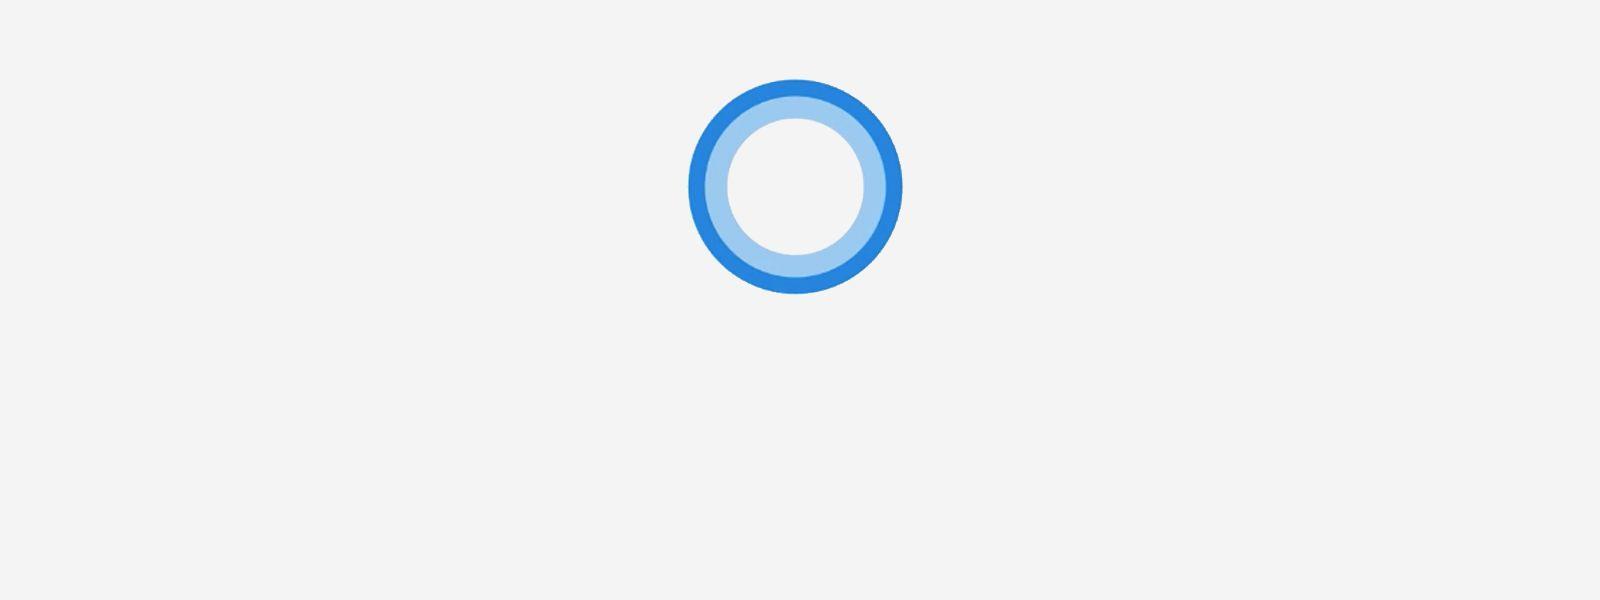 Microsoft Cortana Logo - Personal Digital Assistant Home Assistant